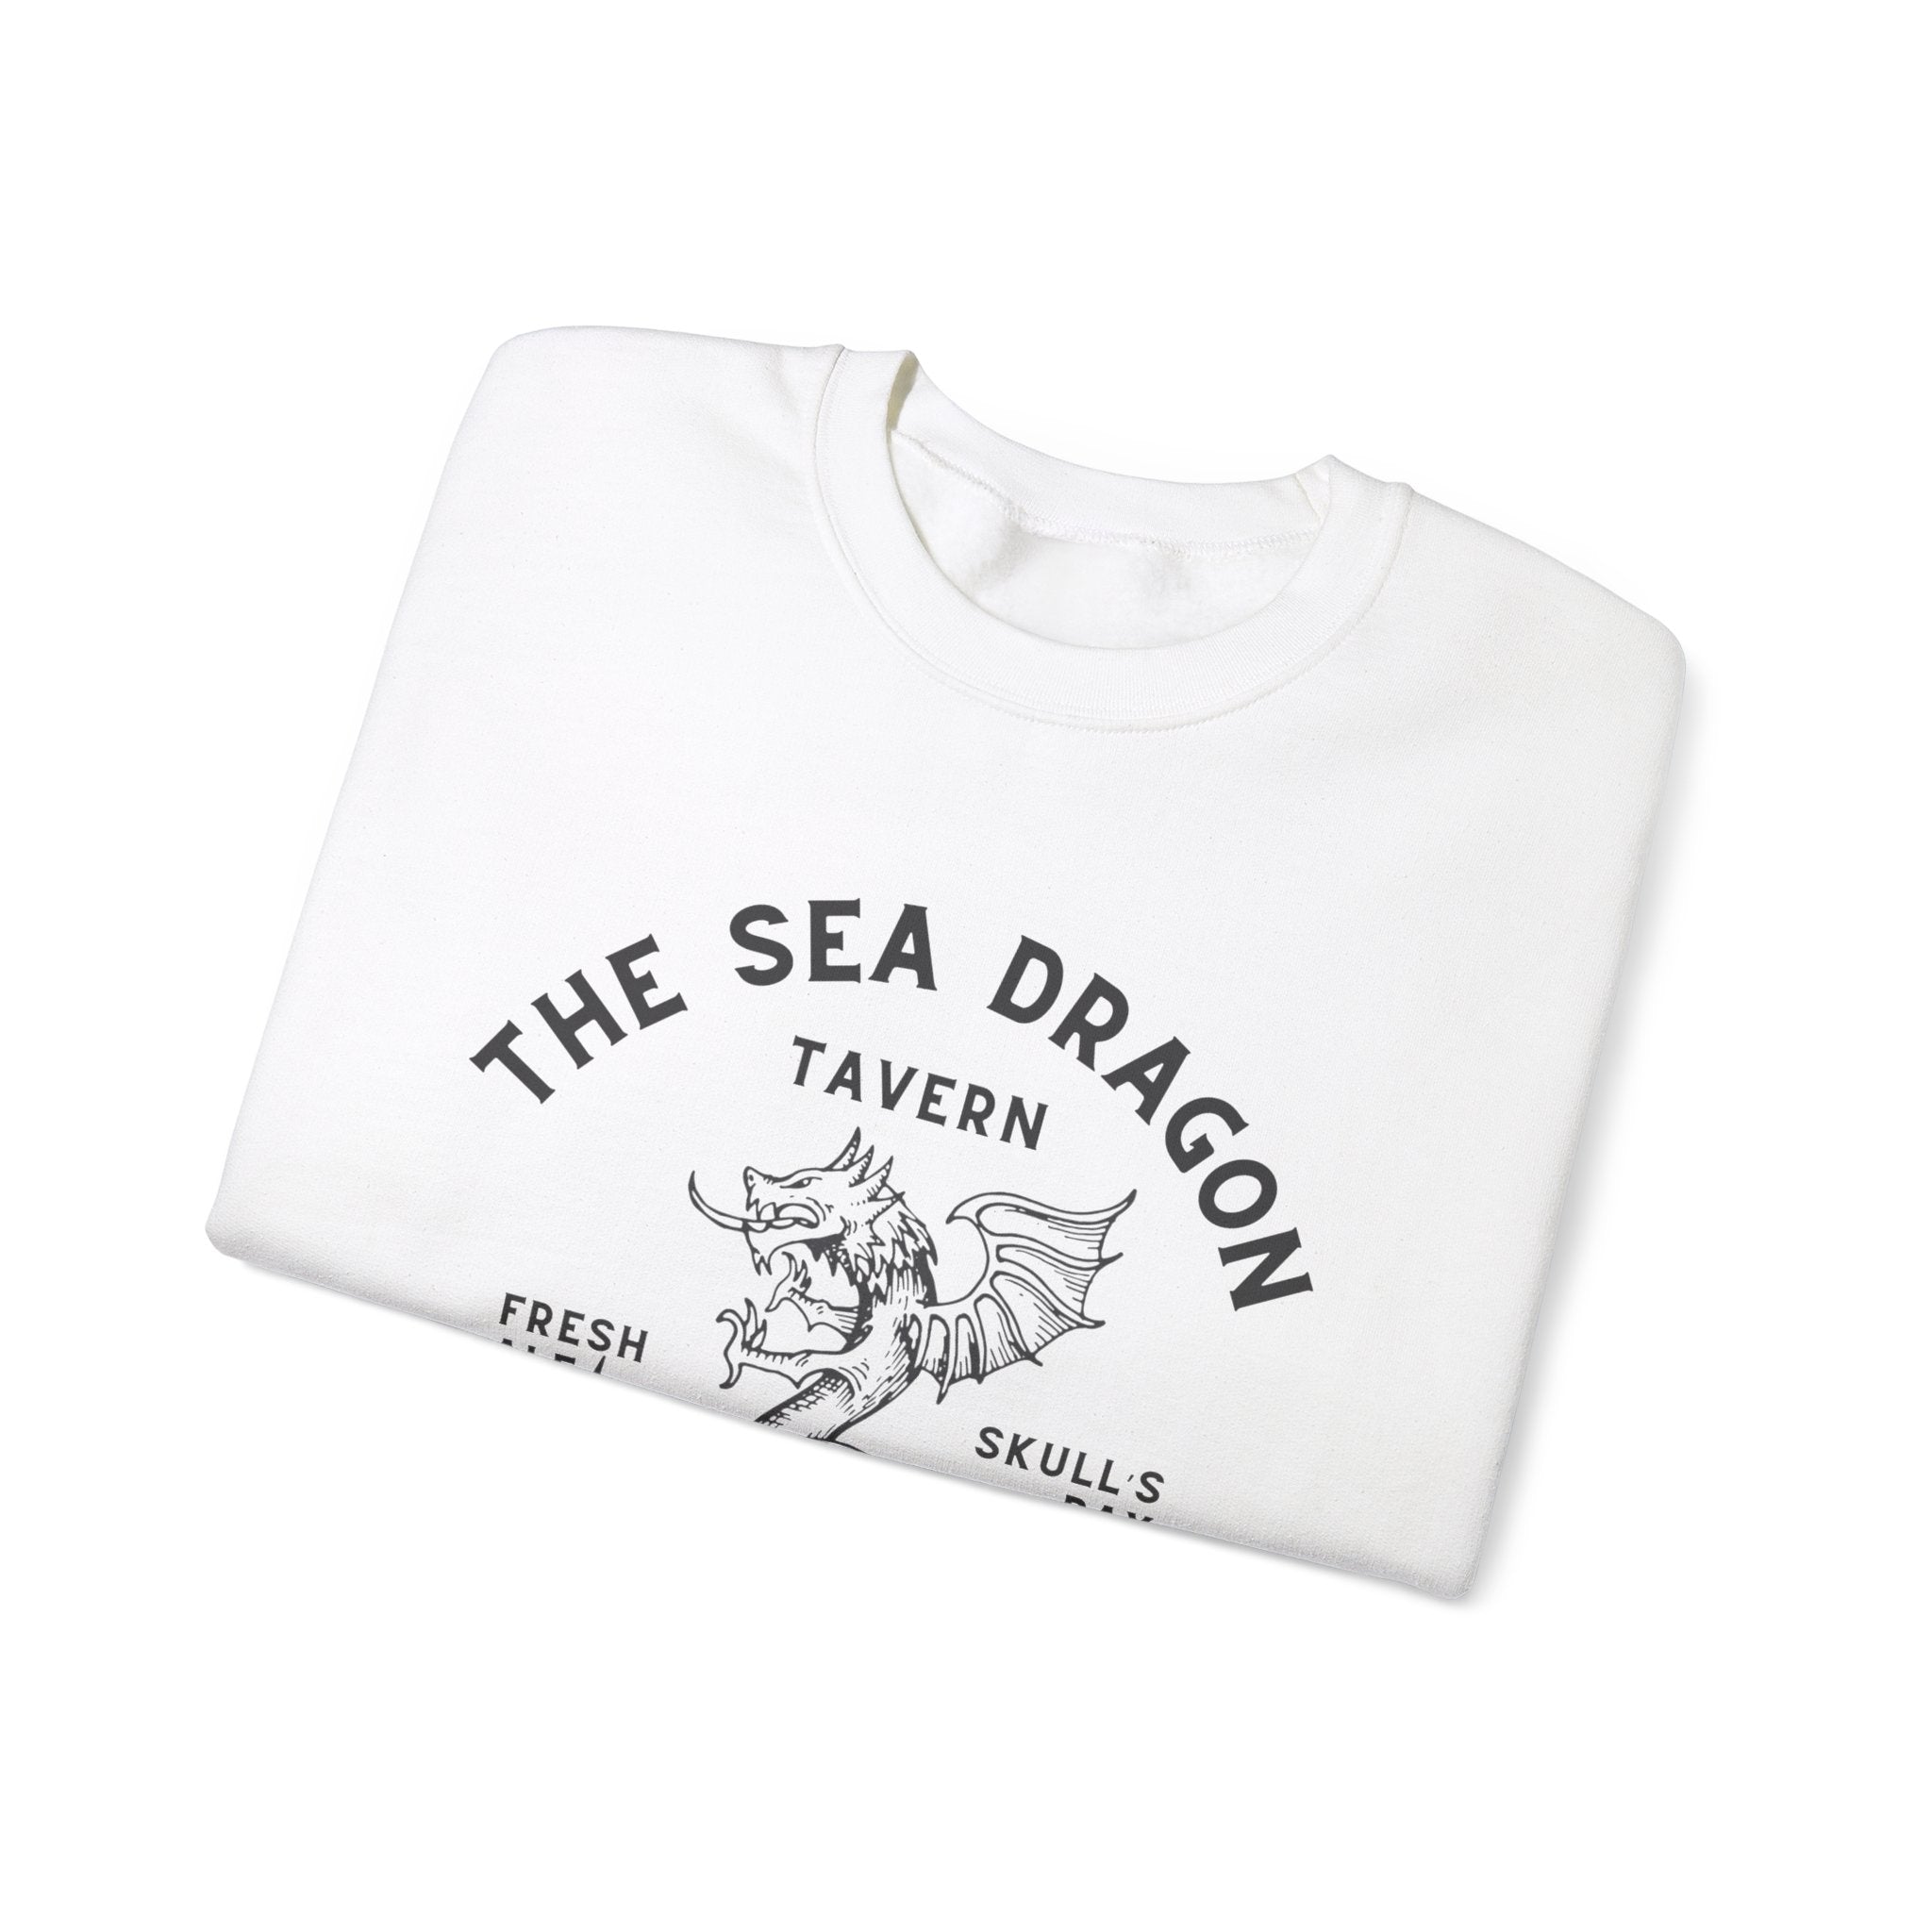 THE SEA DRAGON CREWNECK SWEATSHIRT